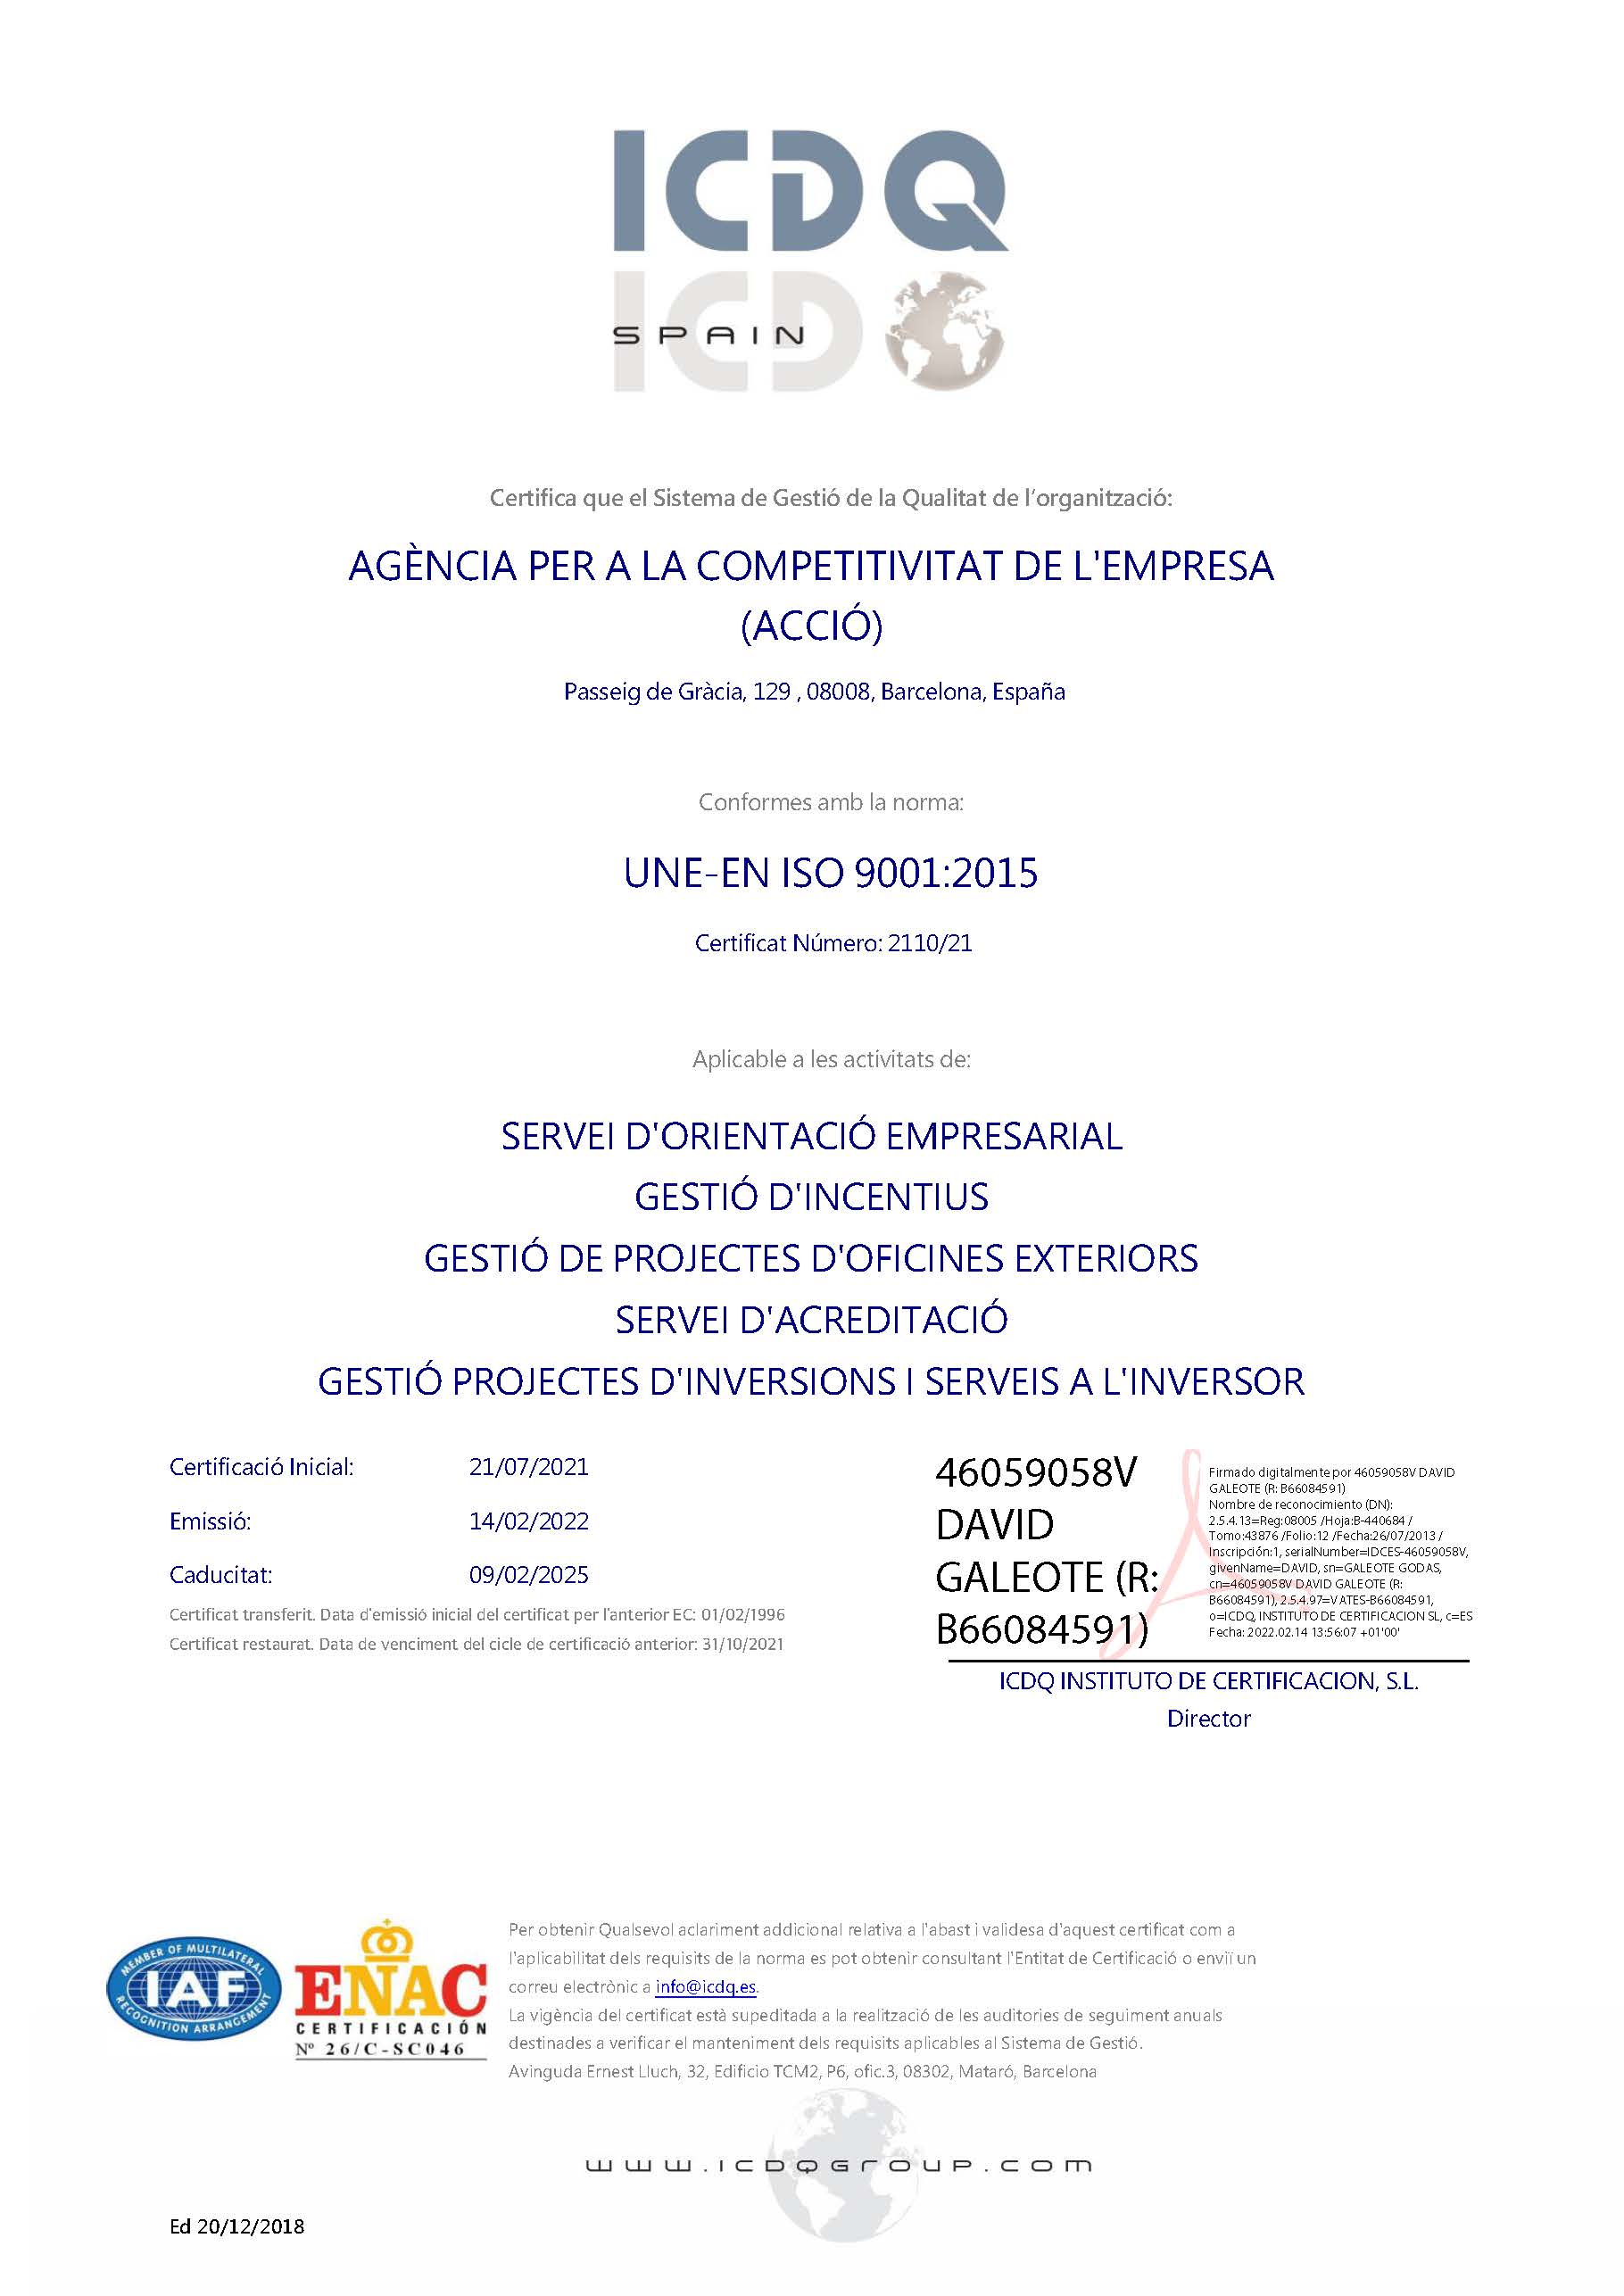 ACCIÓ's Quality Management System Certification